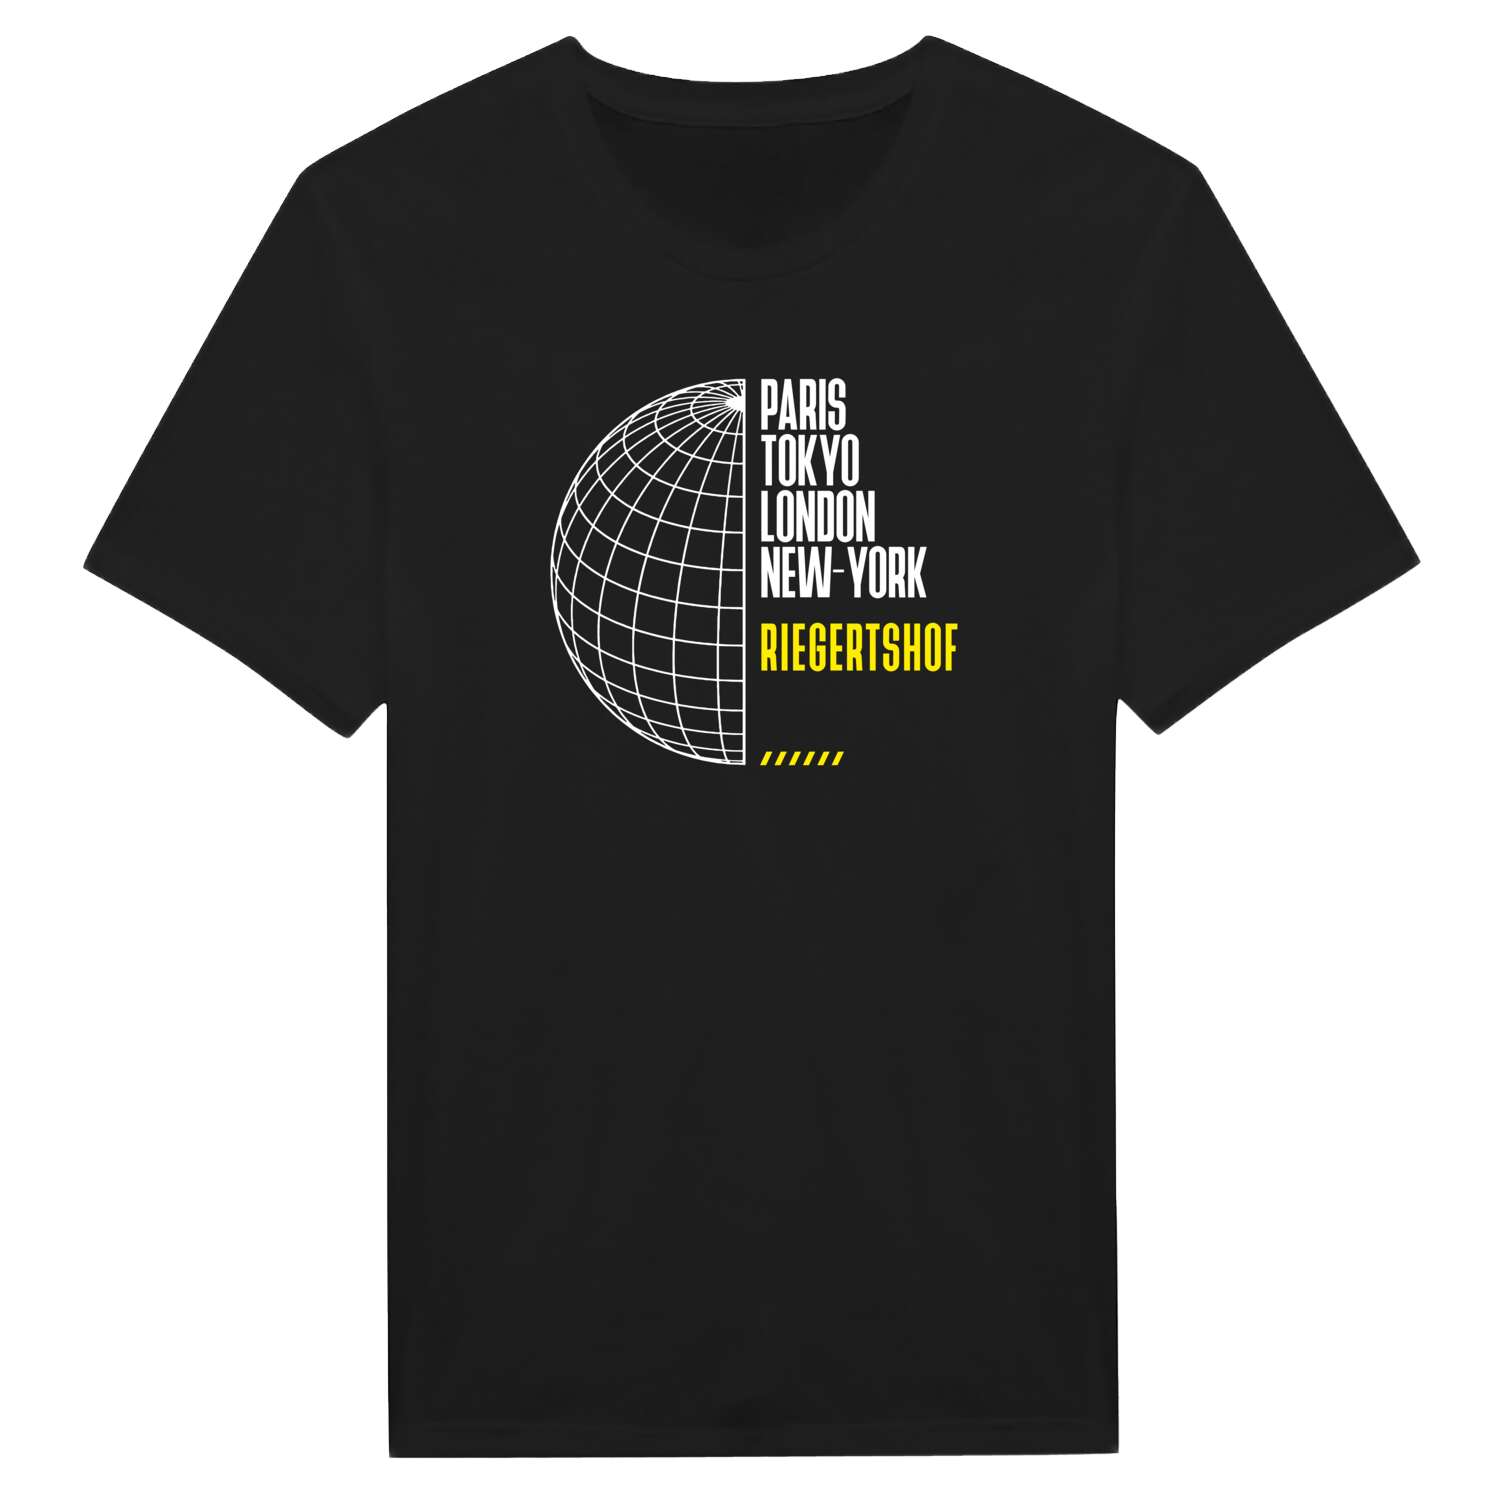 Riegertshof T-Shirt »Paris Tokyo London«